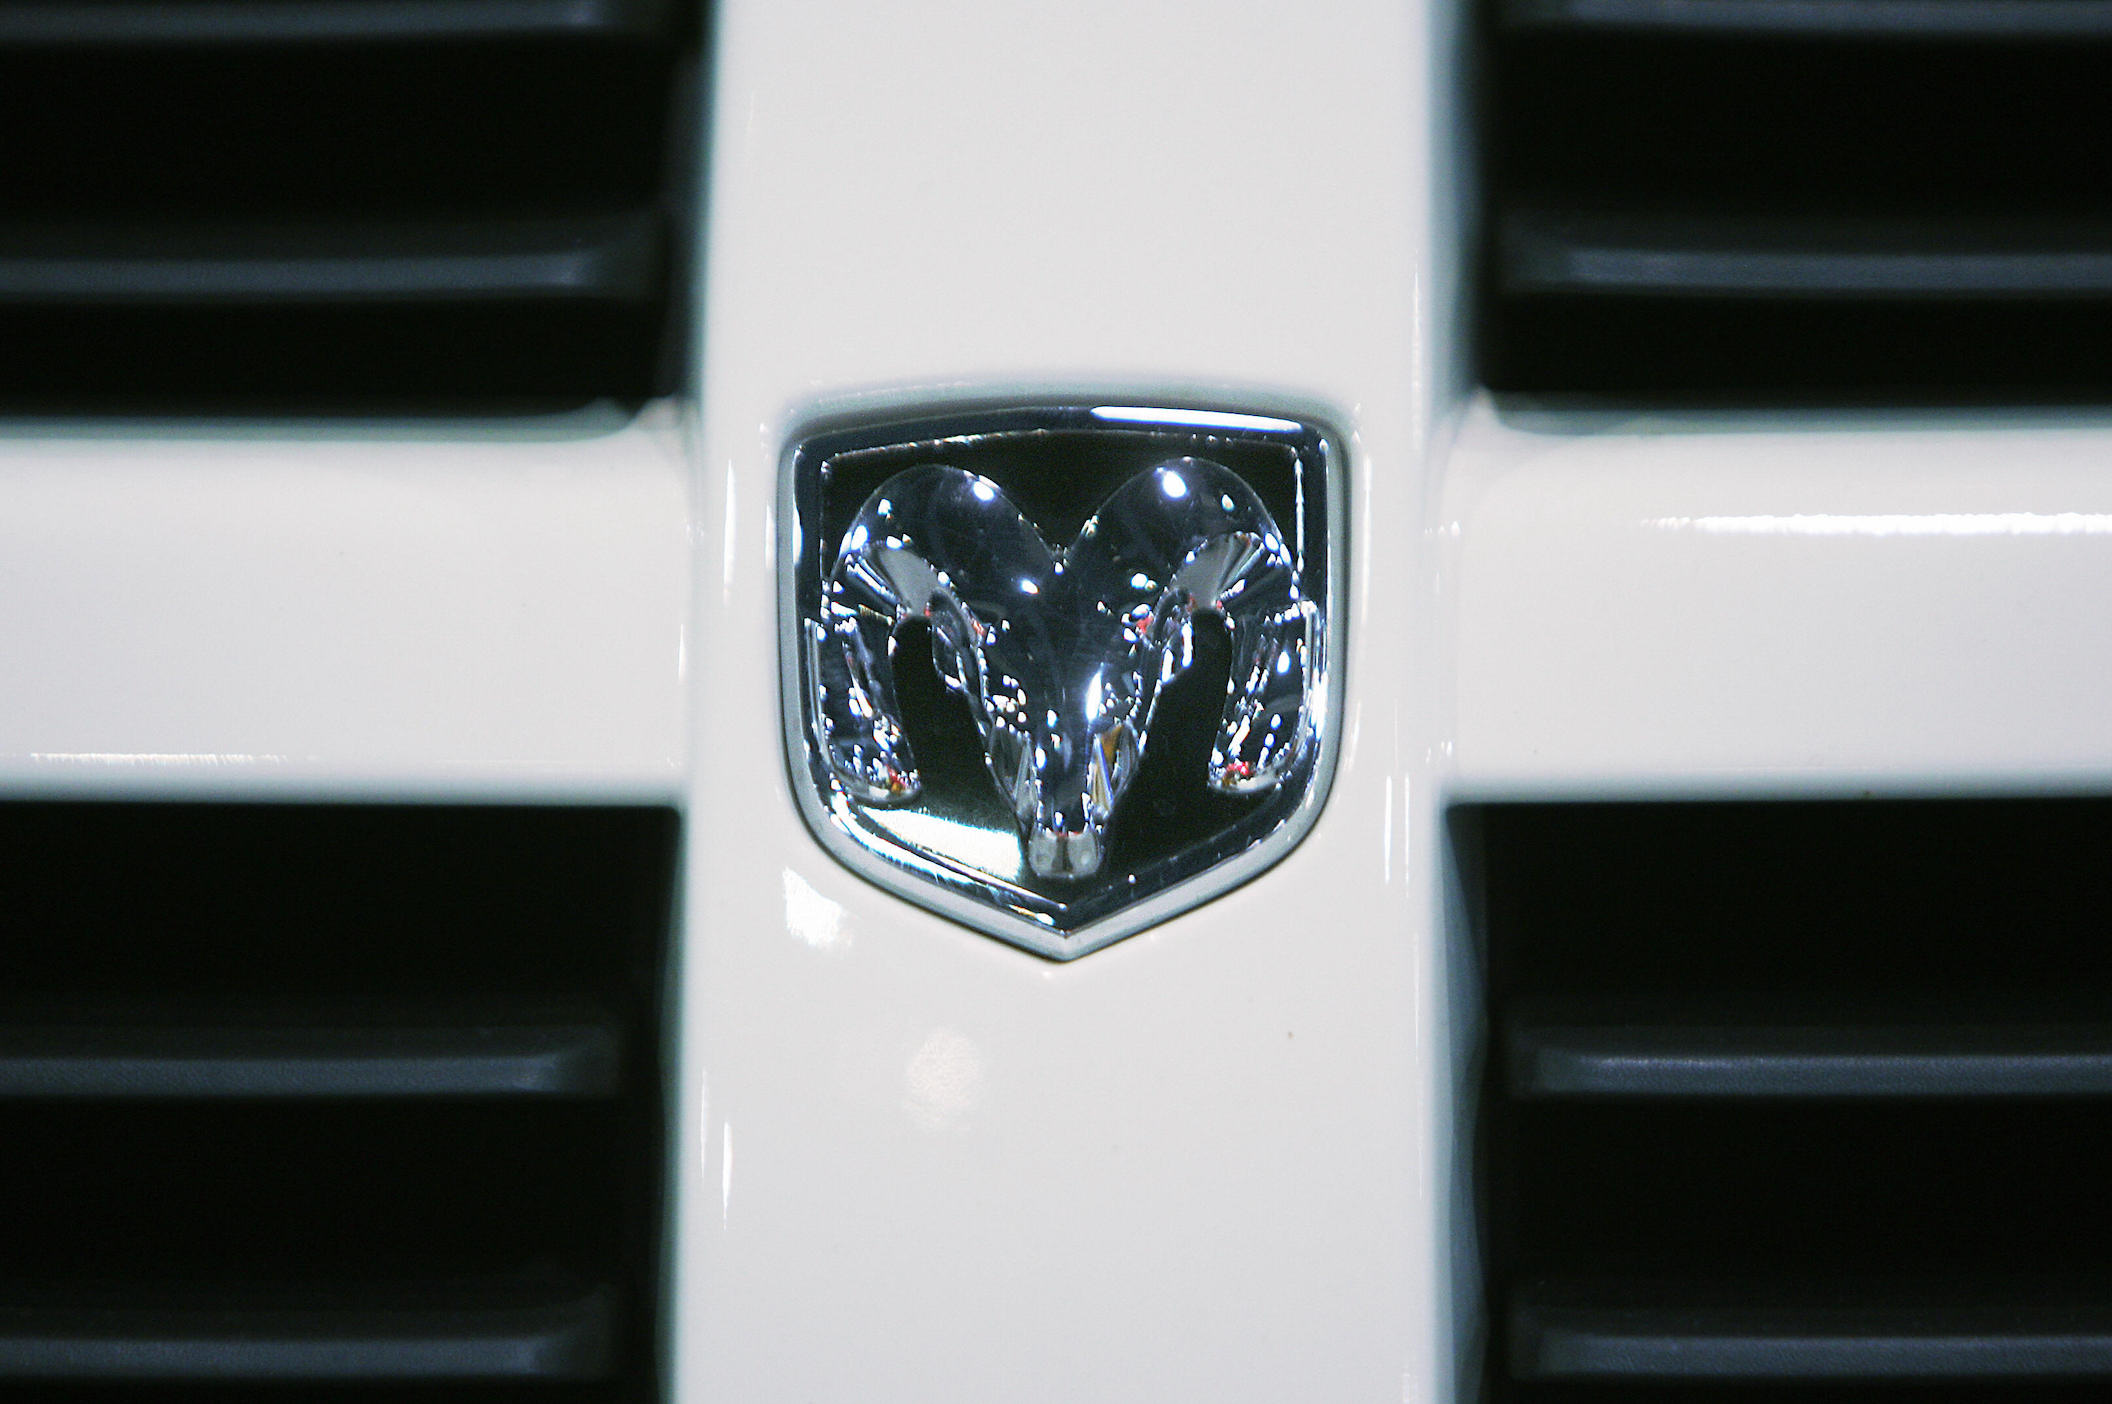 The logo for Dodge Ram